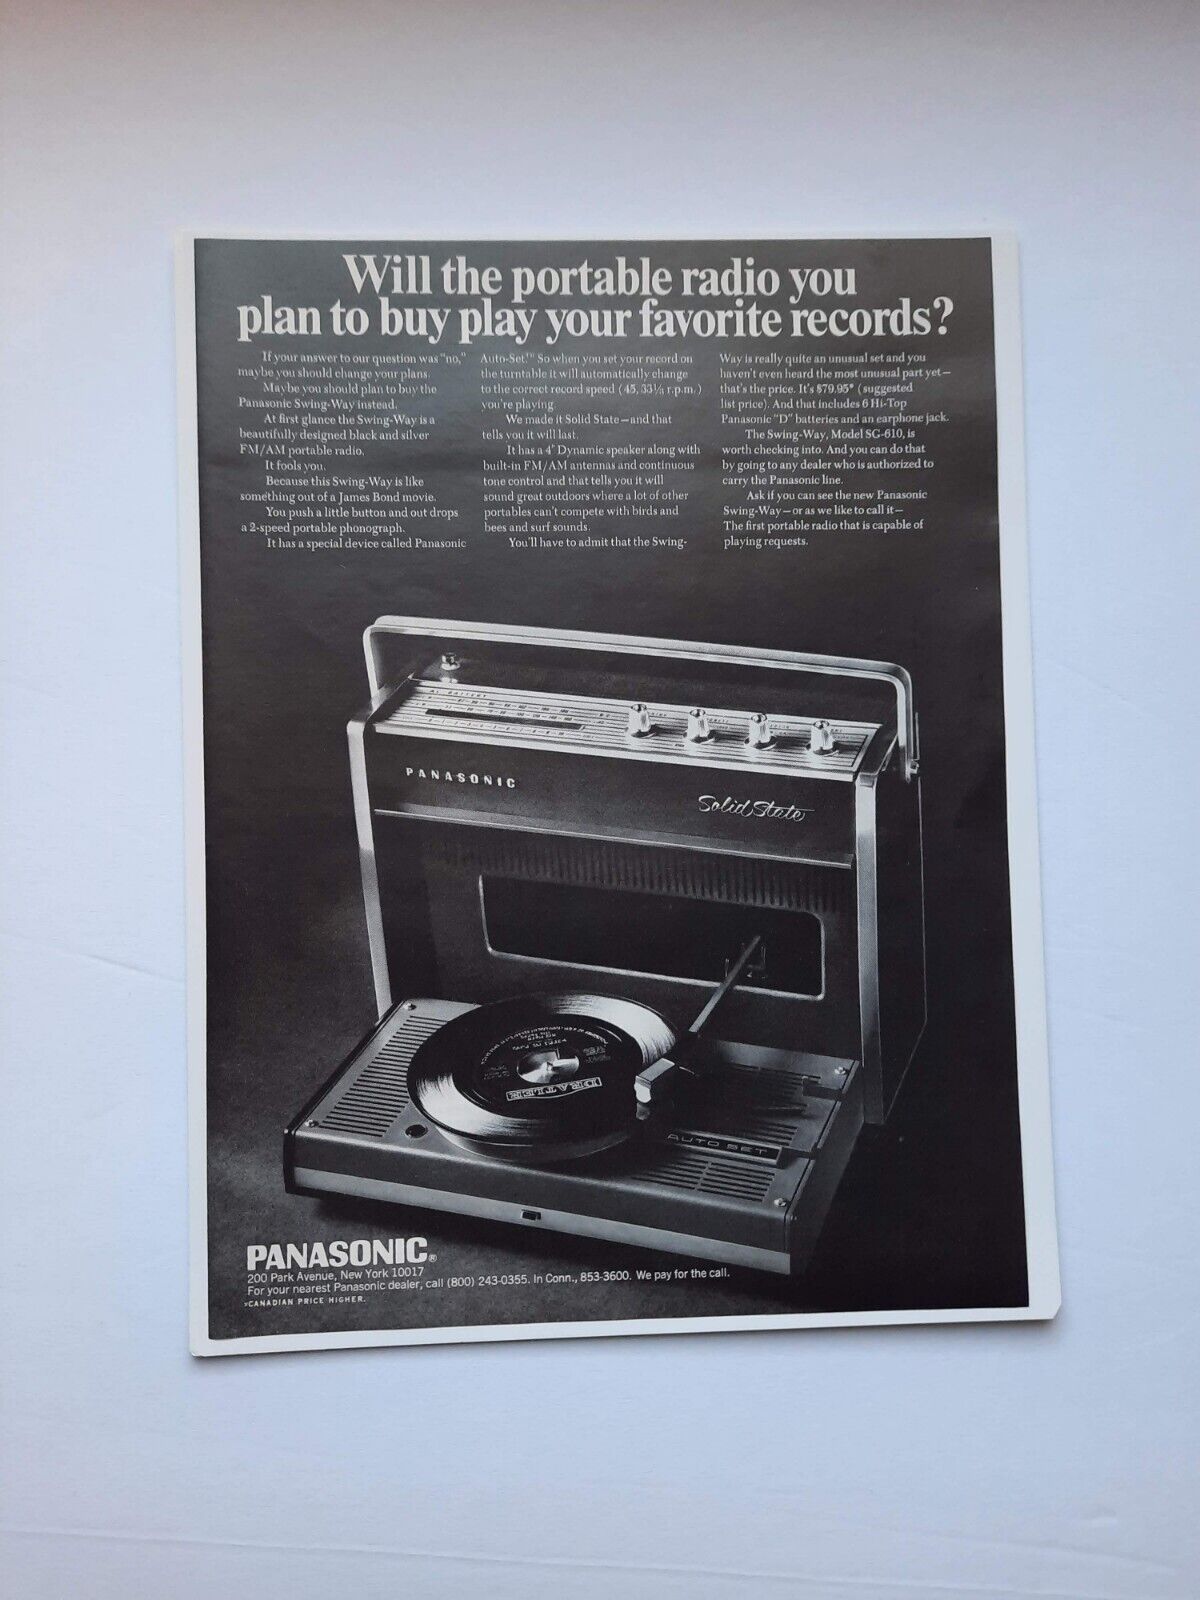 1968 Panasonic Portable Swing-Way Phonograph/AM FM Radio photo vintage print ad